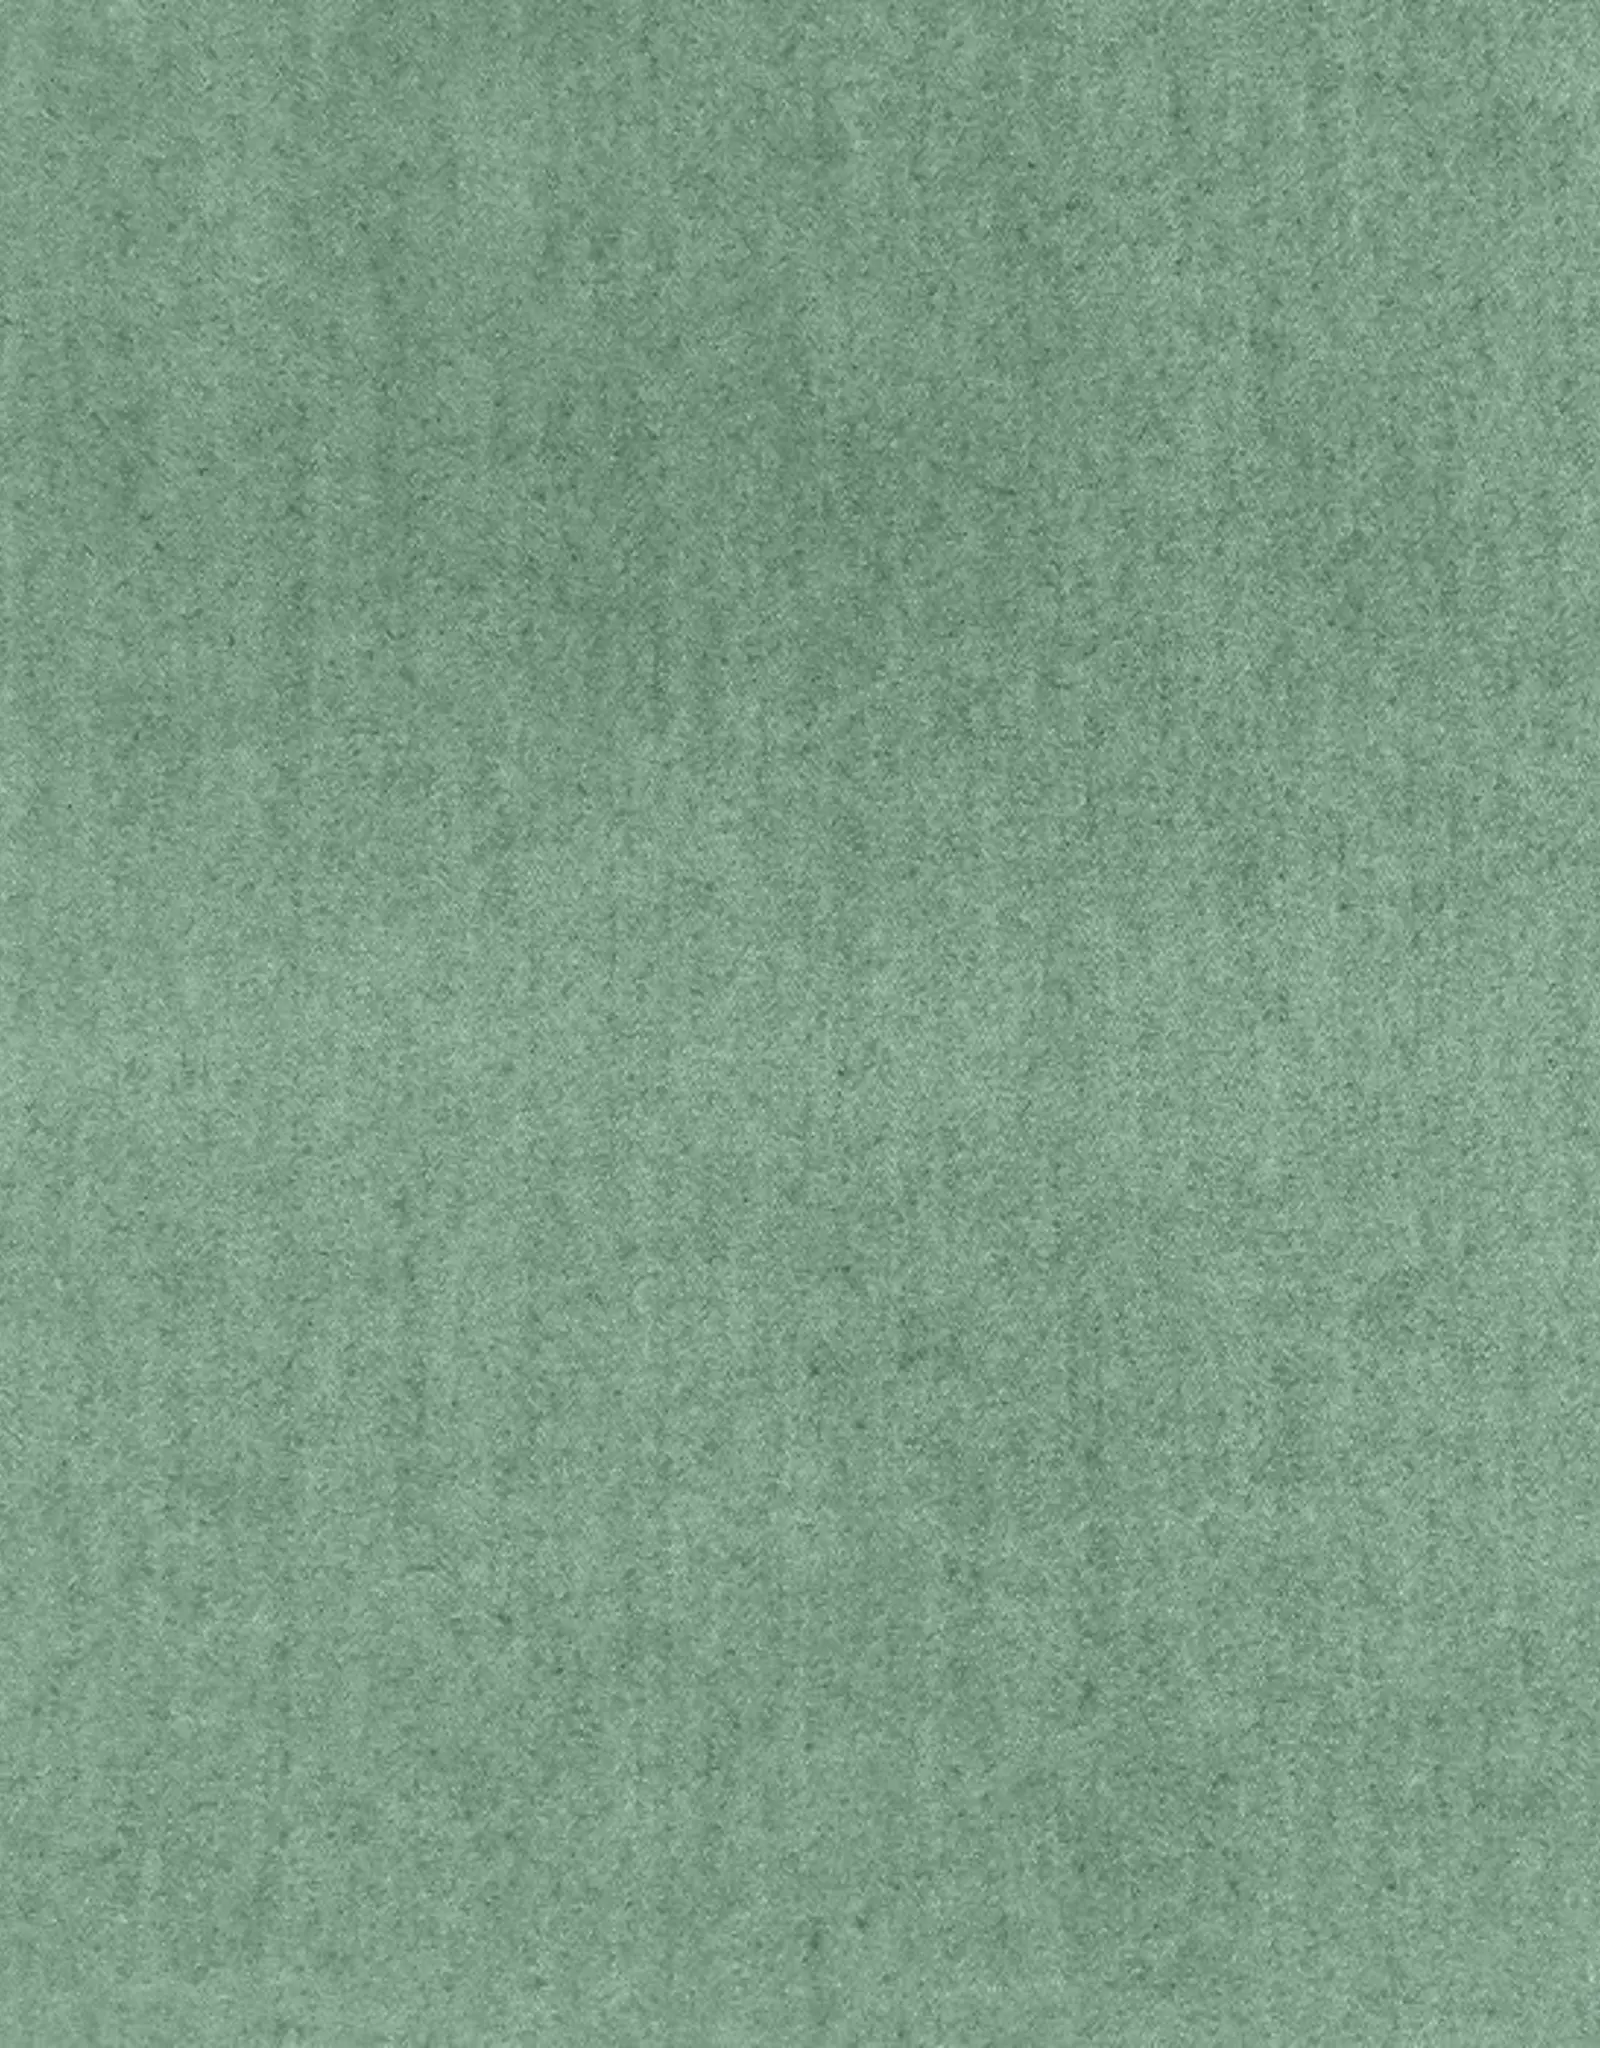 Stoffenschuur selectie Gekleurd knitted jeans oud groen